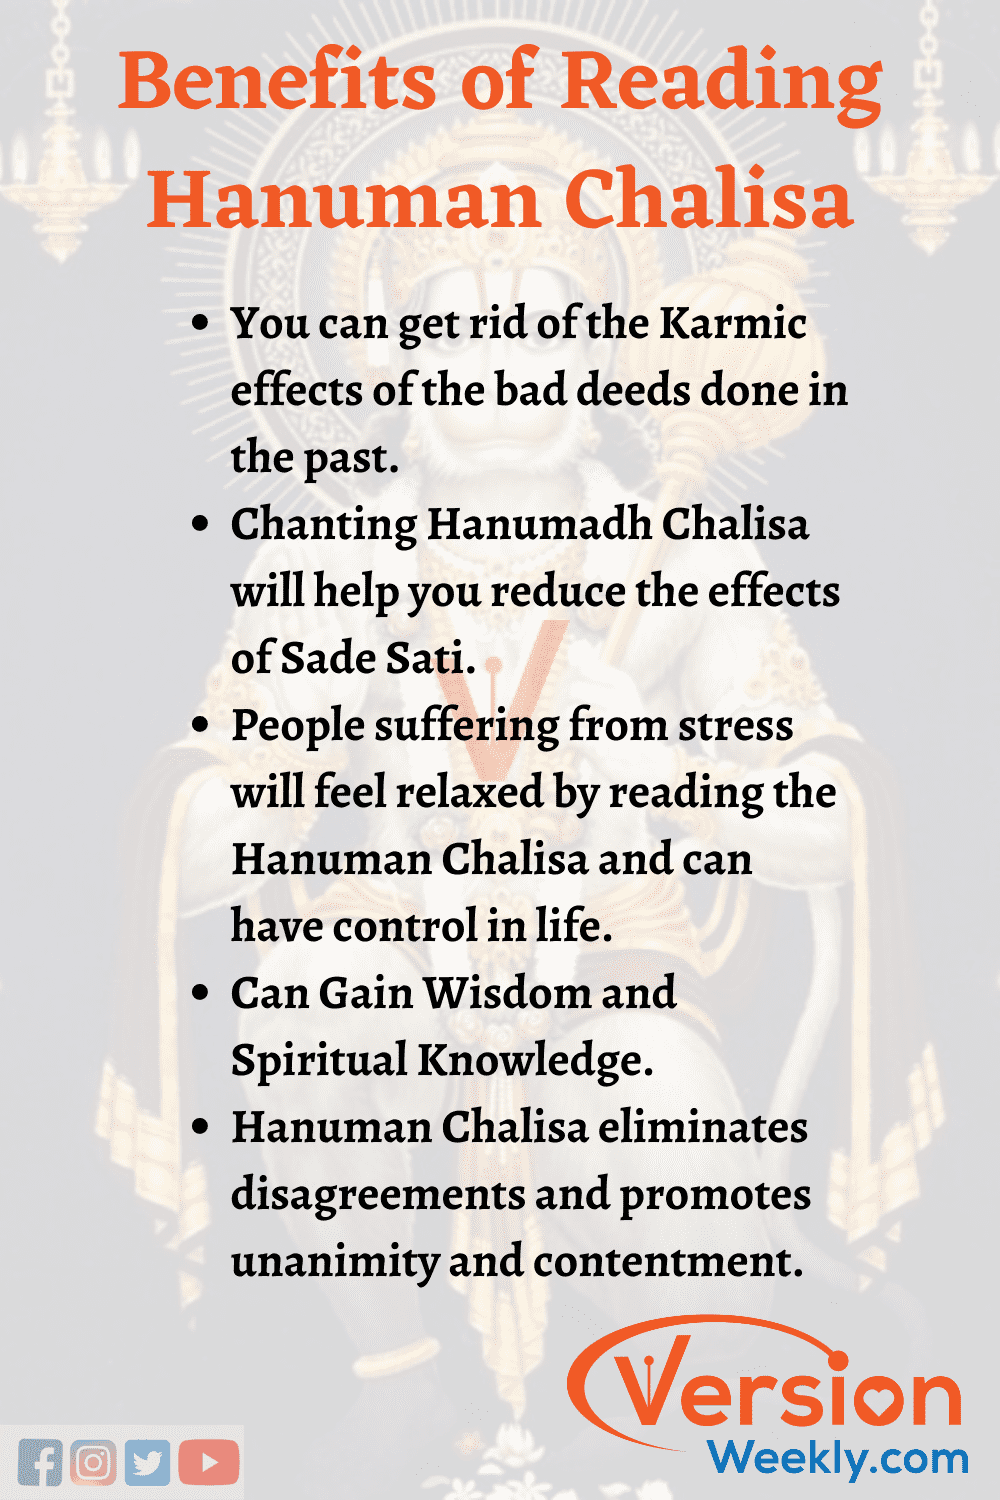 Benefits of reading Hanuman Chalisa